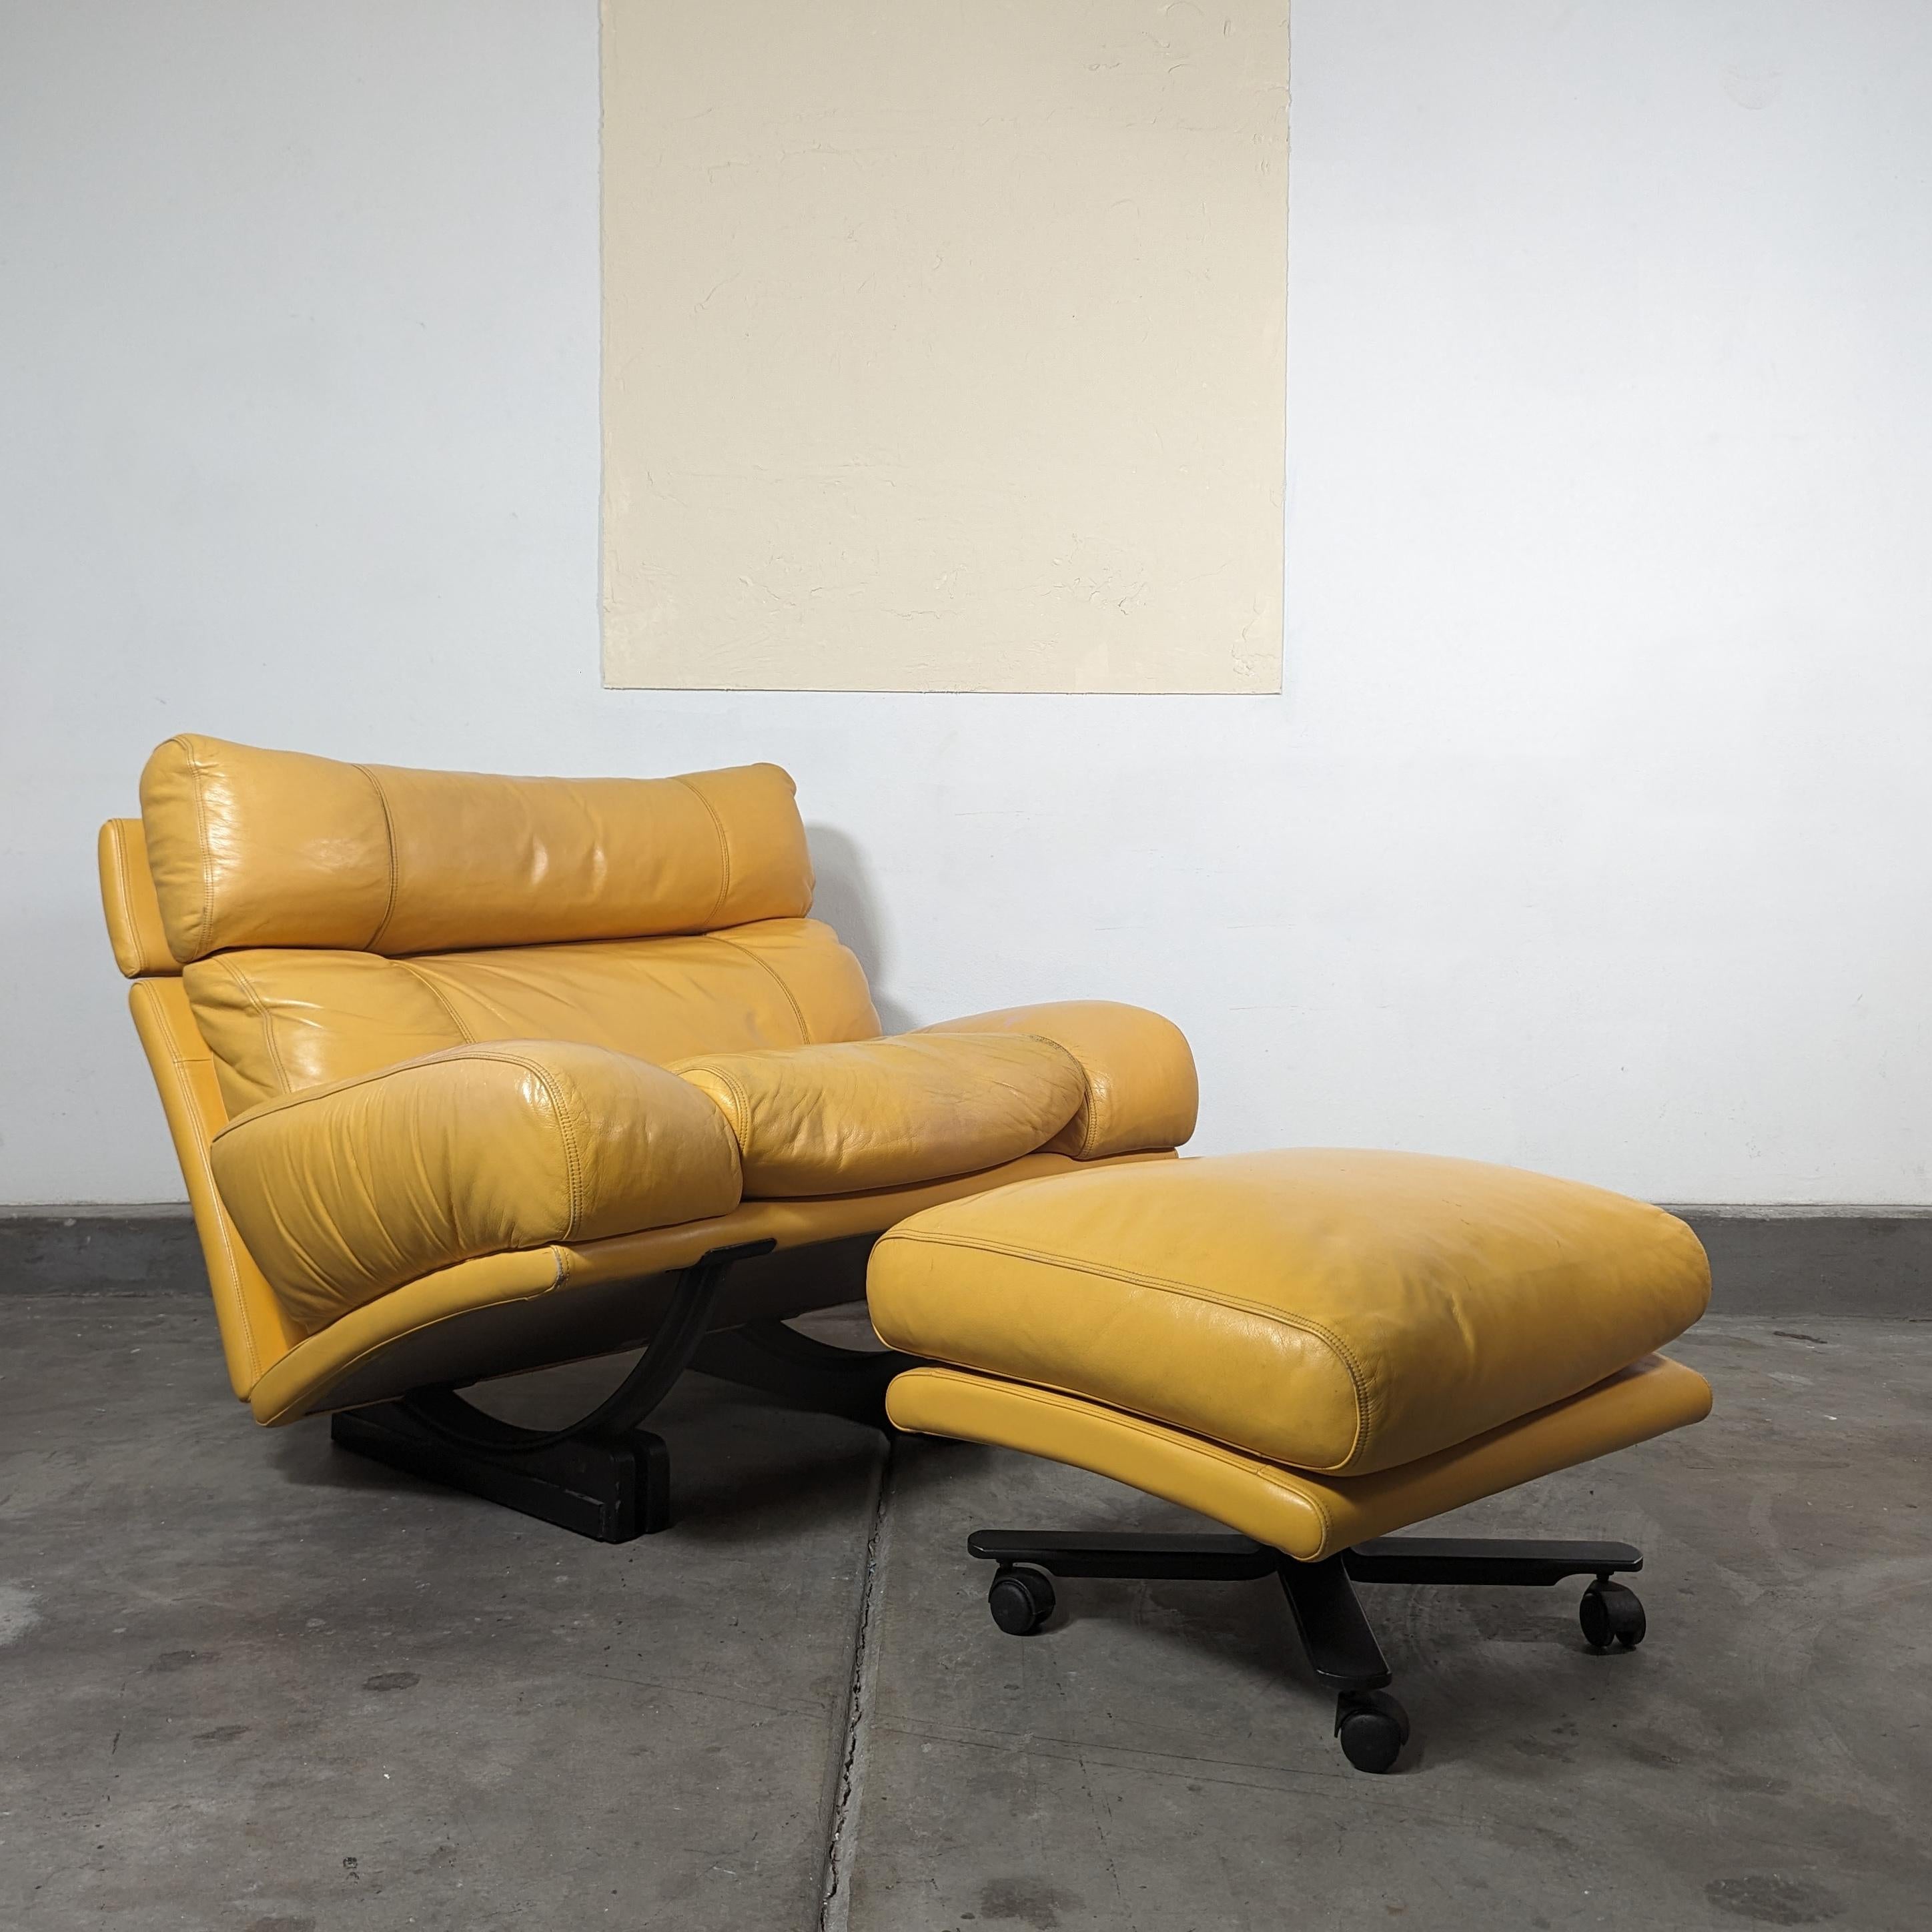 Italian Postmodern Walse Leather Lounge Chair by Tito Agnoli for Poltrona Frau, c1990s For Sale